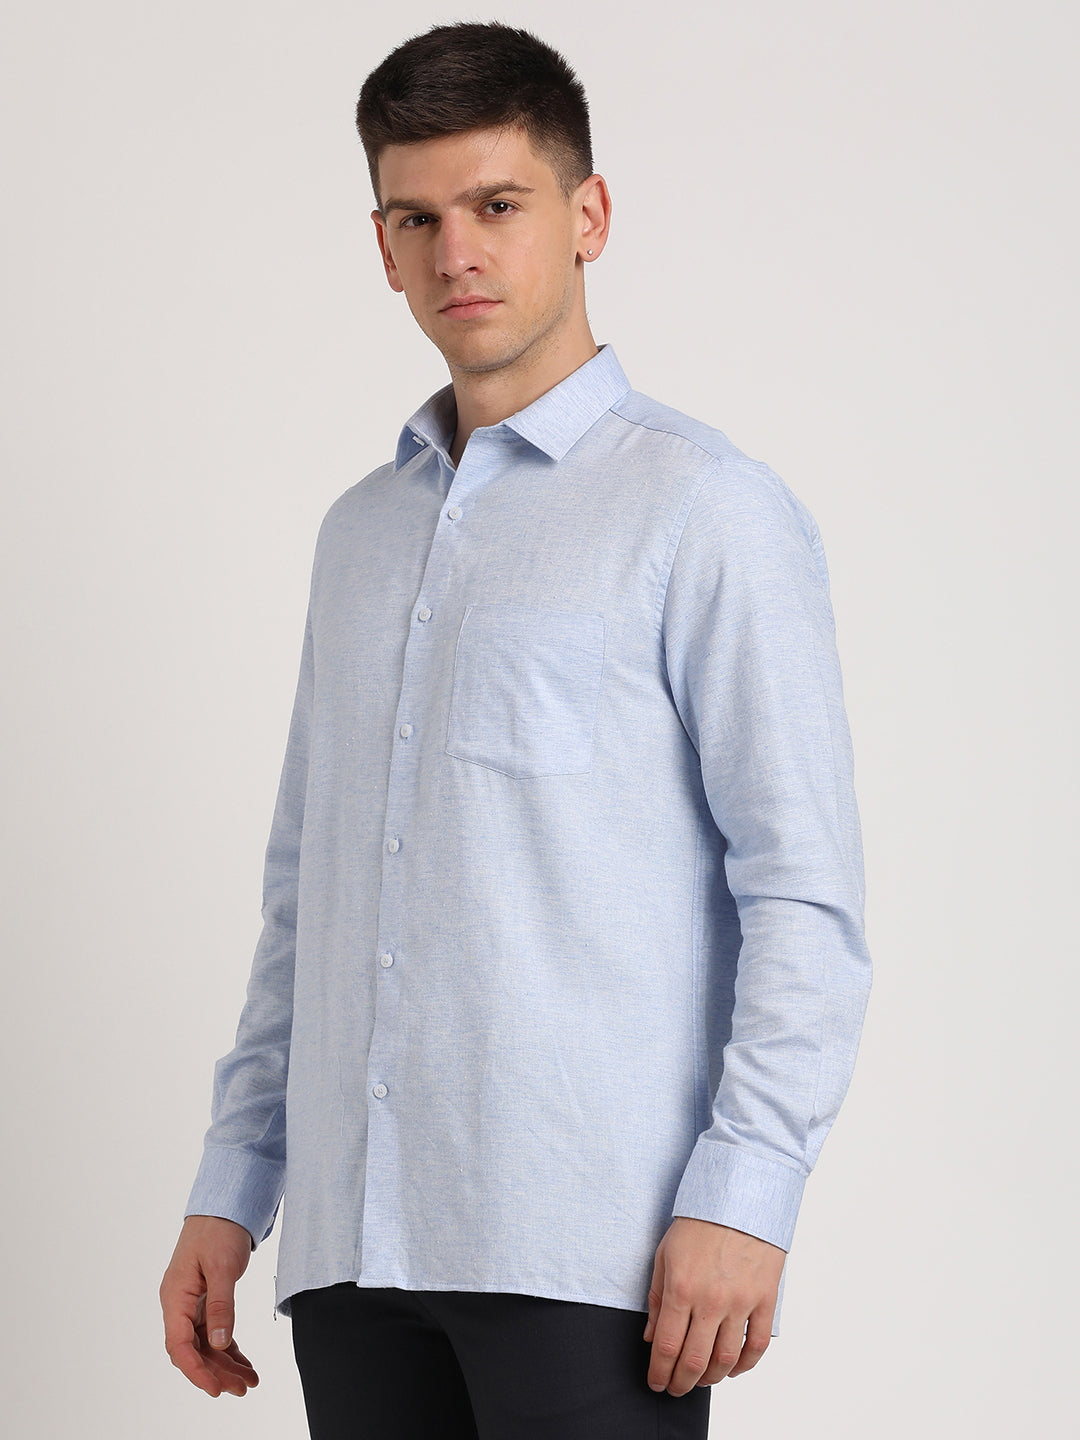 100% Cotton Light Blue Plain Regular Fit Full Sleeve Formal Shirt